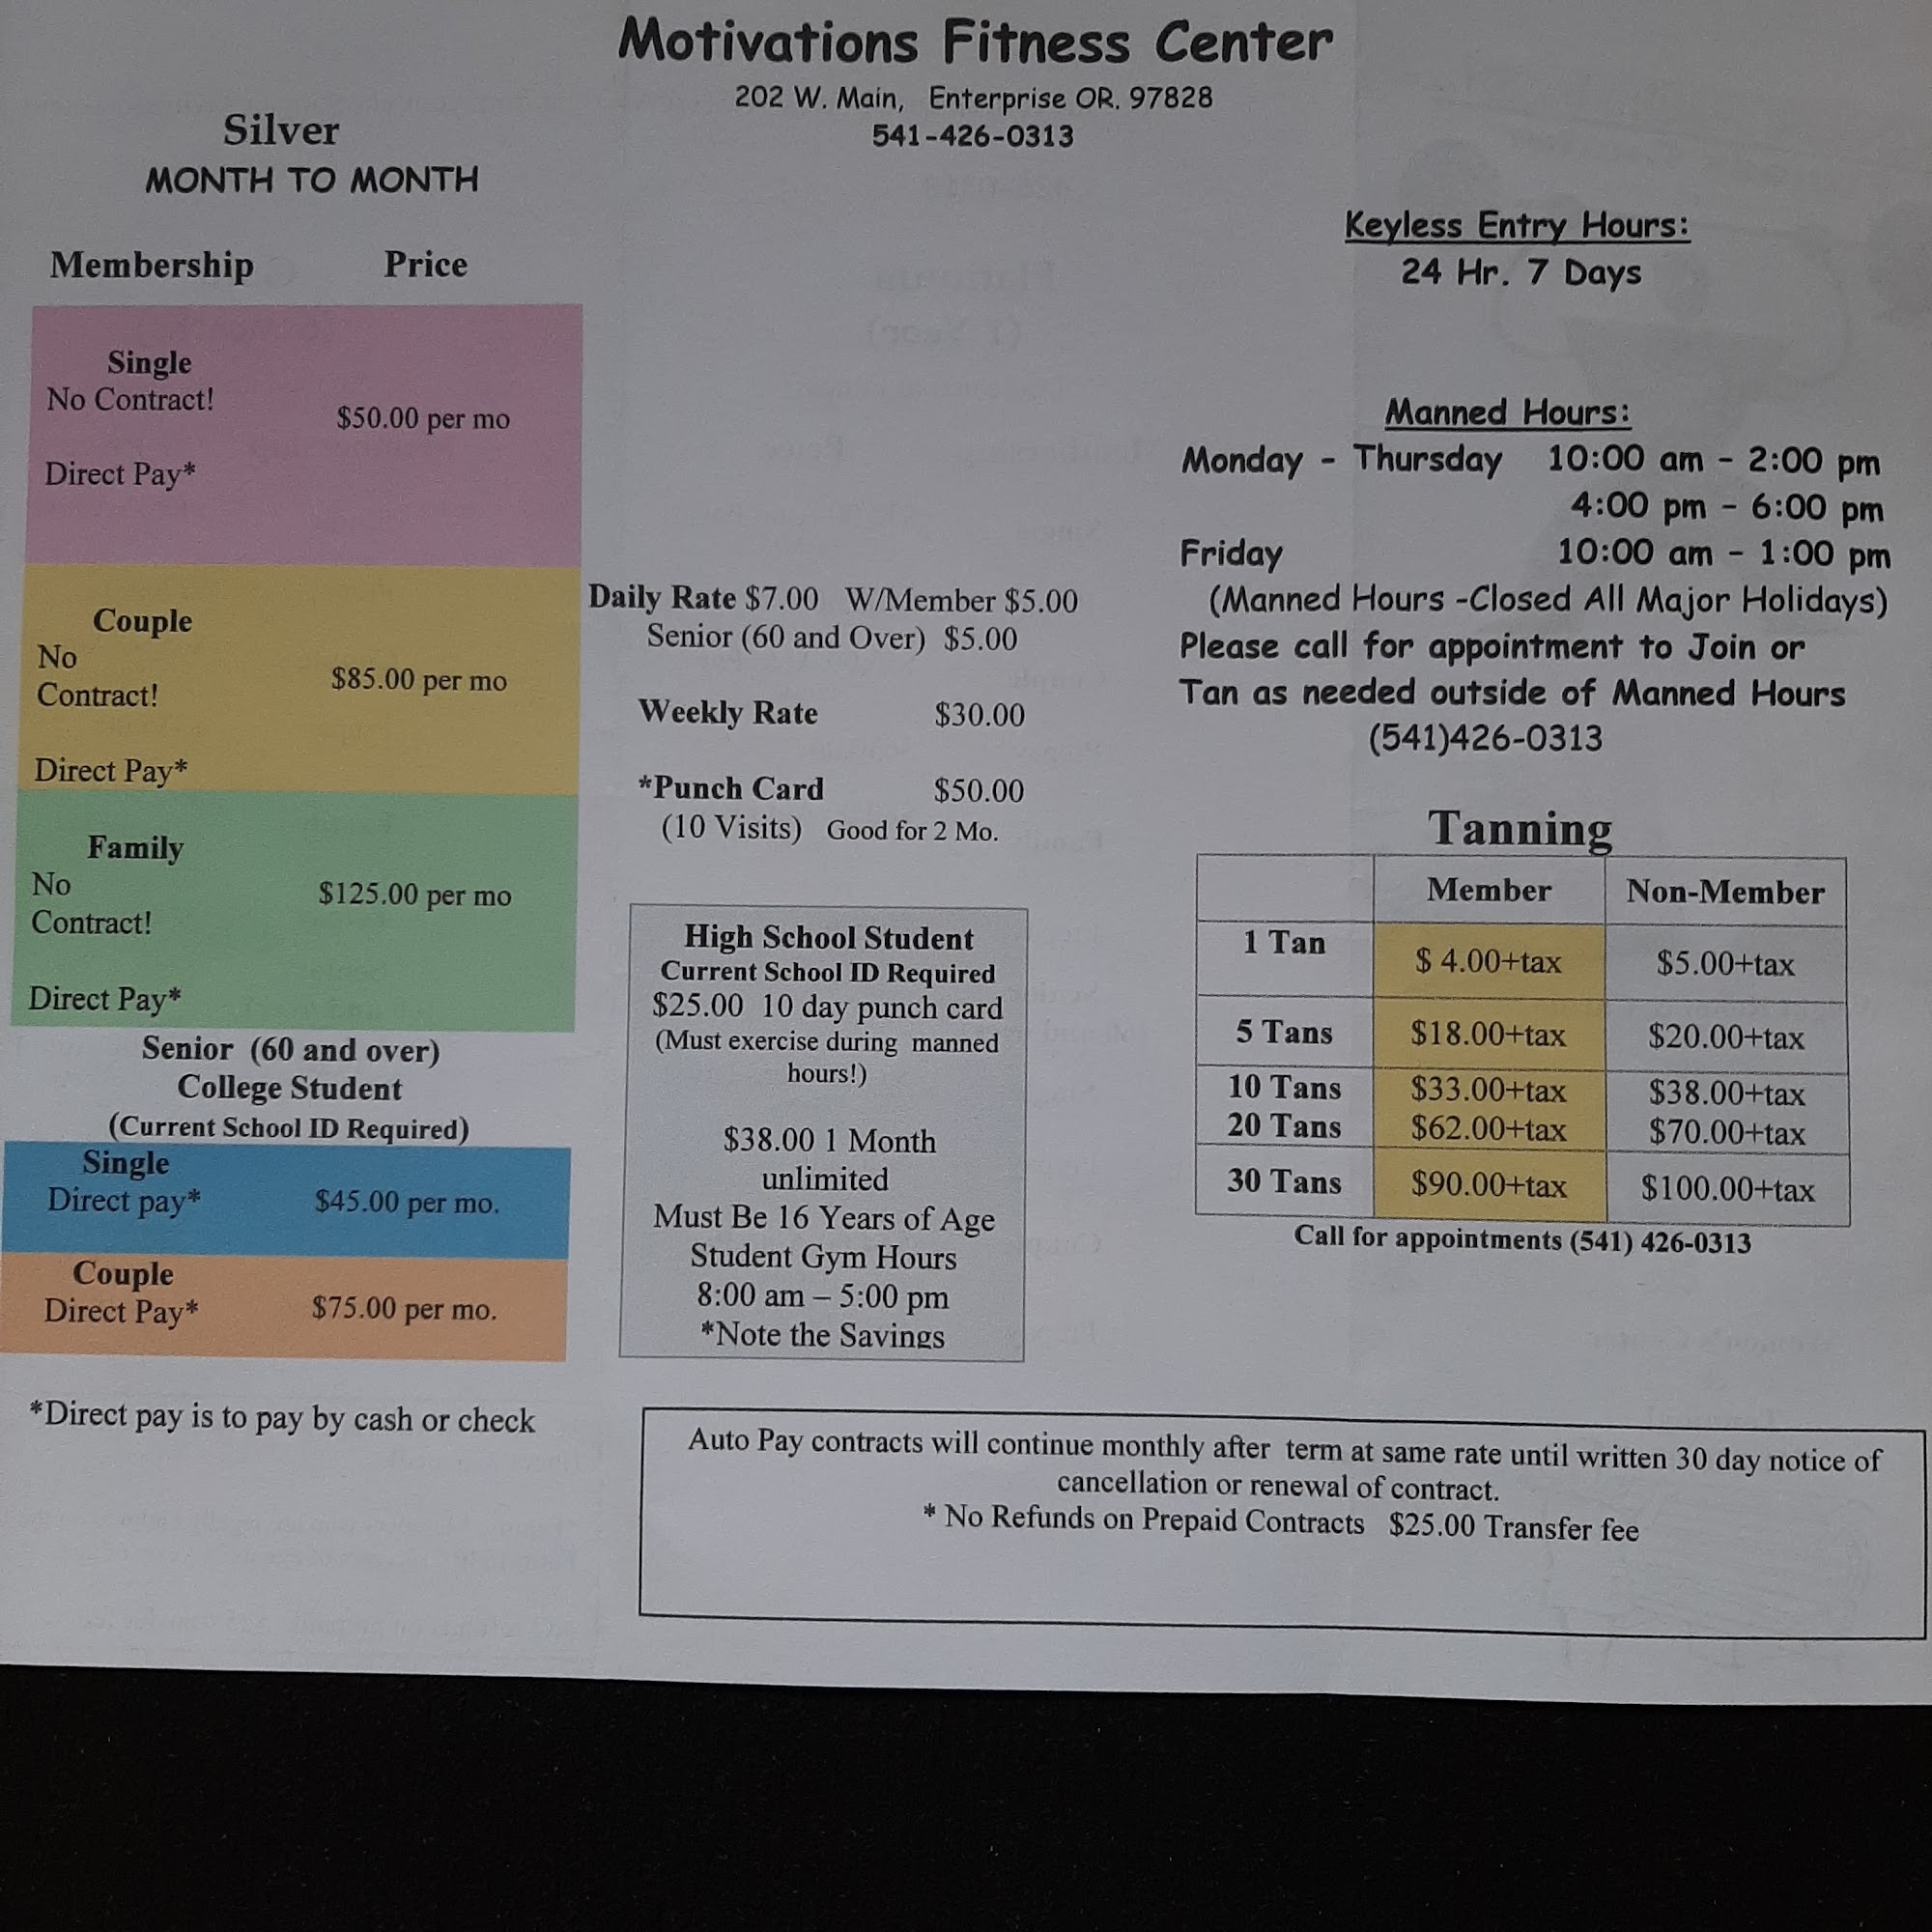 Motivations Fitness Center LLC 202 W Main St, Enterprise Oregon 97828